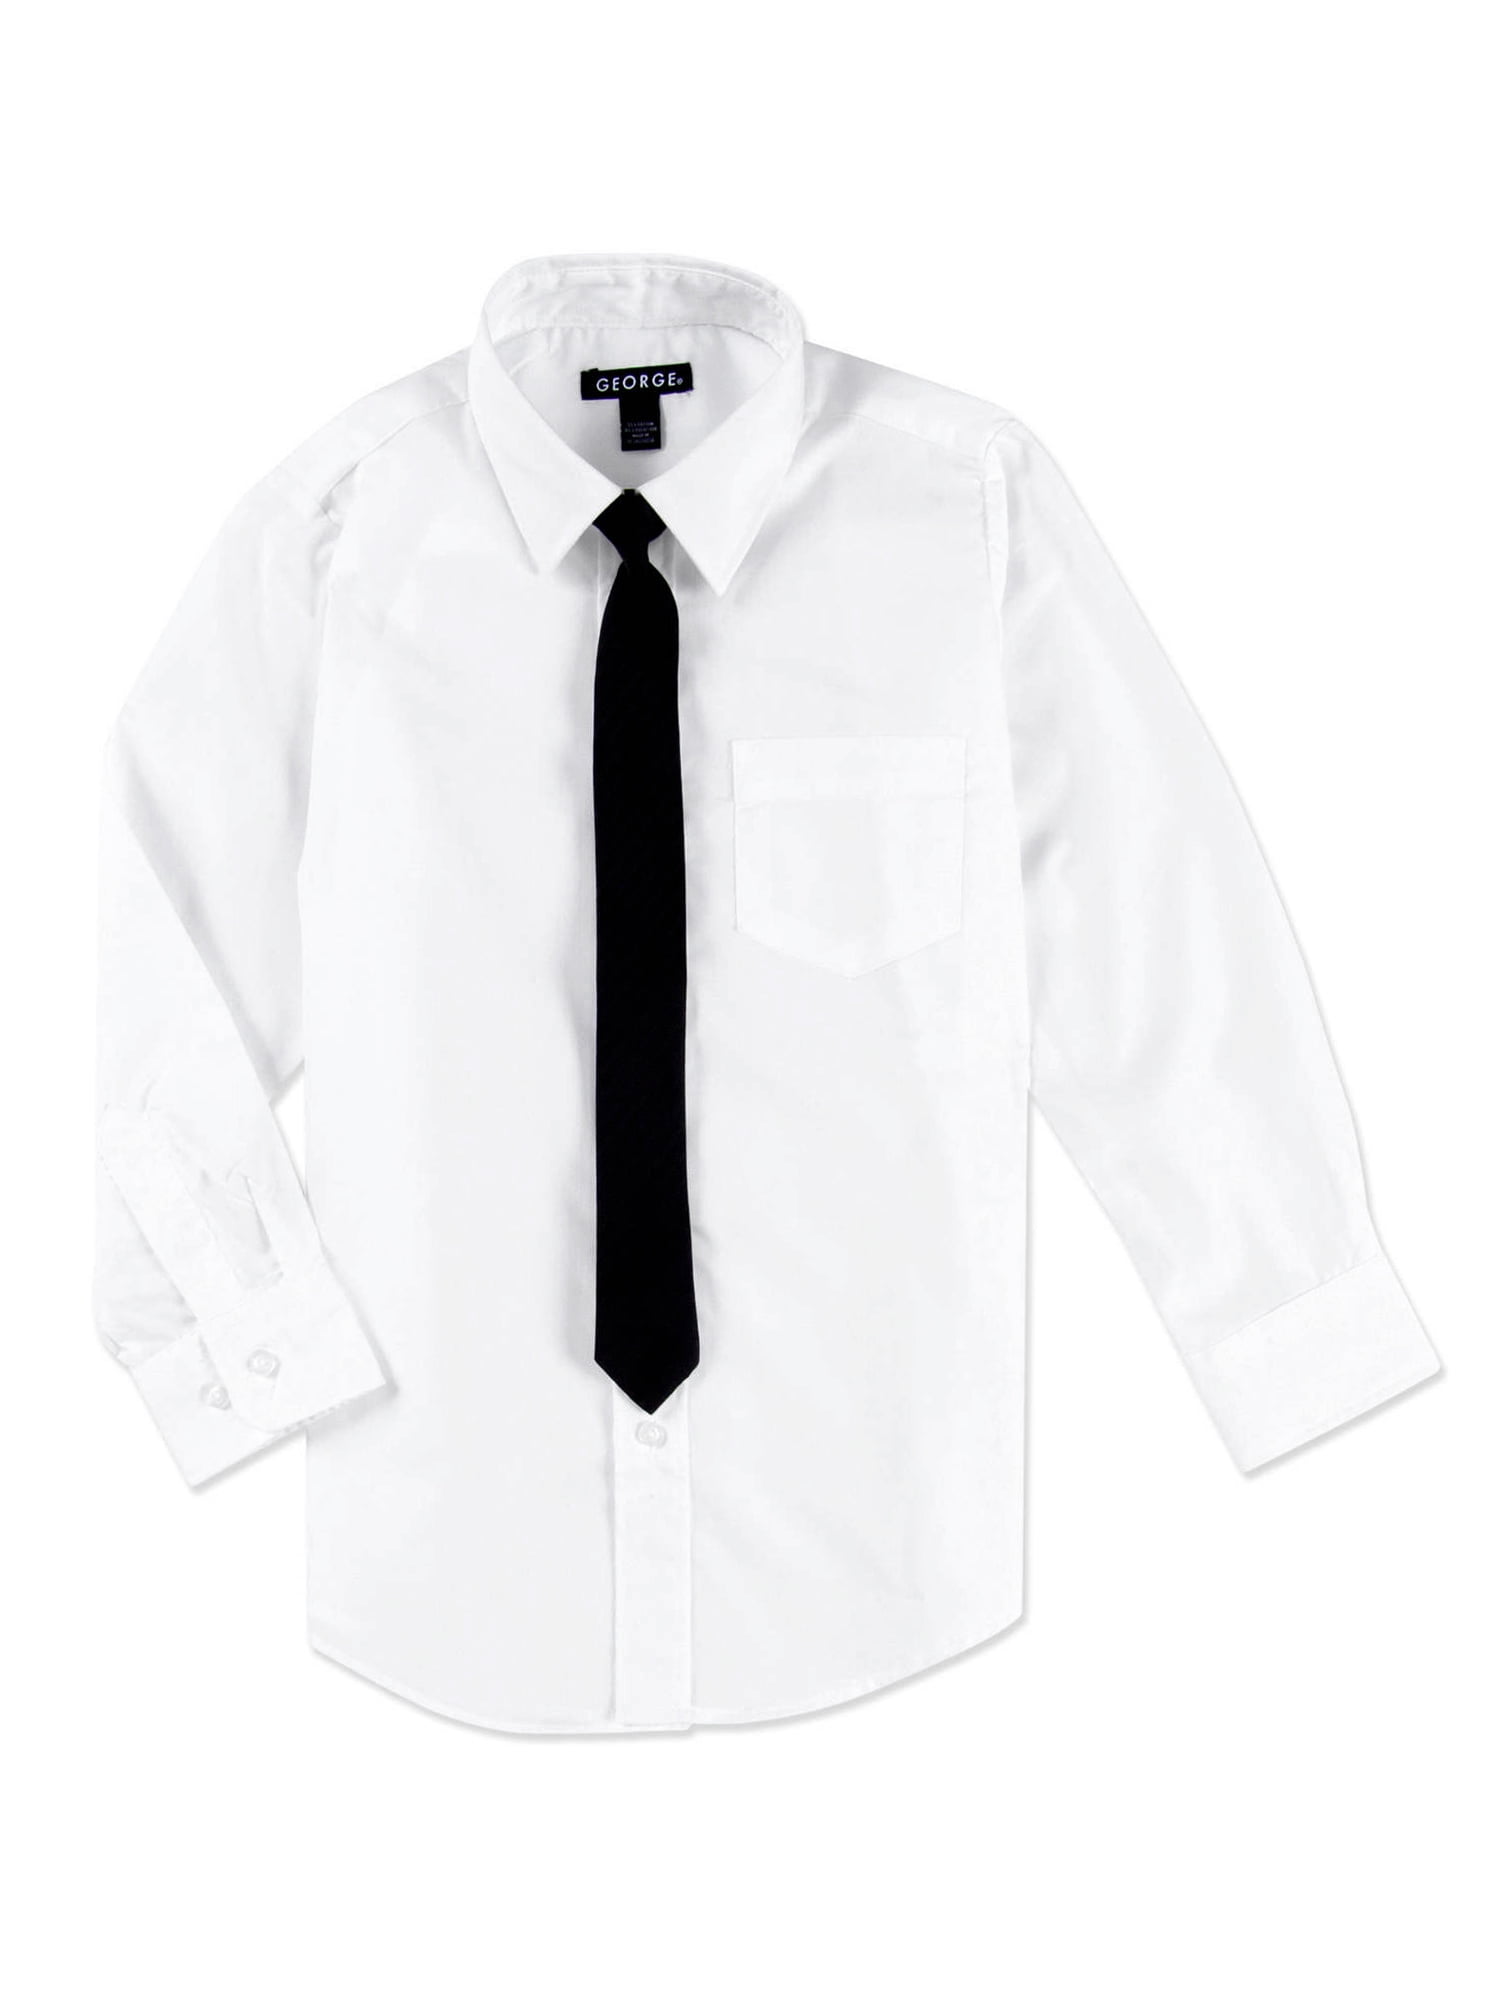 white dress shirt with black tie